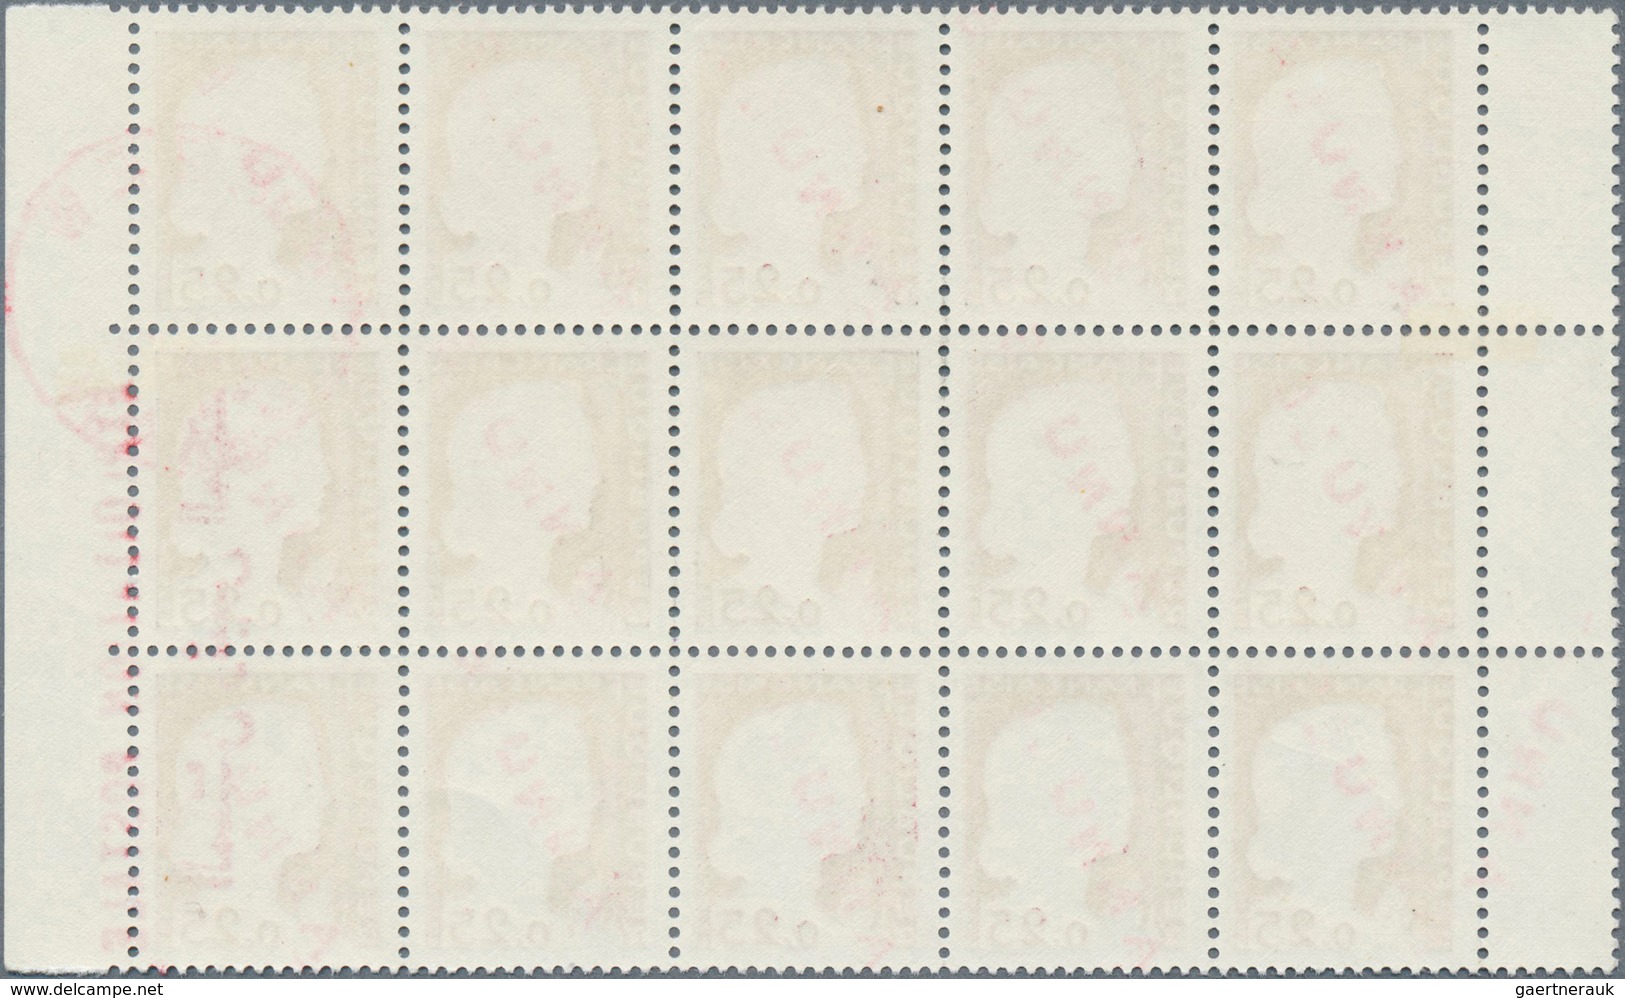 11568 Algerien: 1960. Block Of 15 "Decaris 0.25", Each Stamp Overprinted "ANNULÉ". Mint, NH. - Algerien (1962-...)